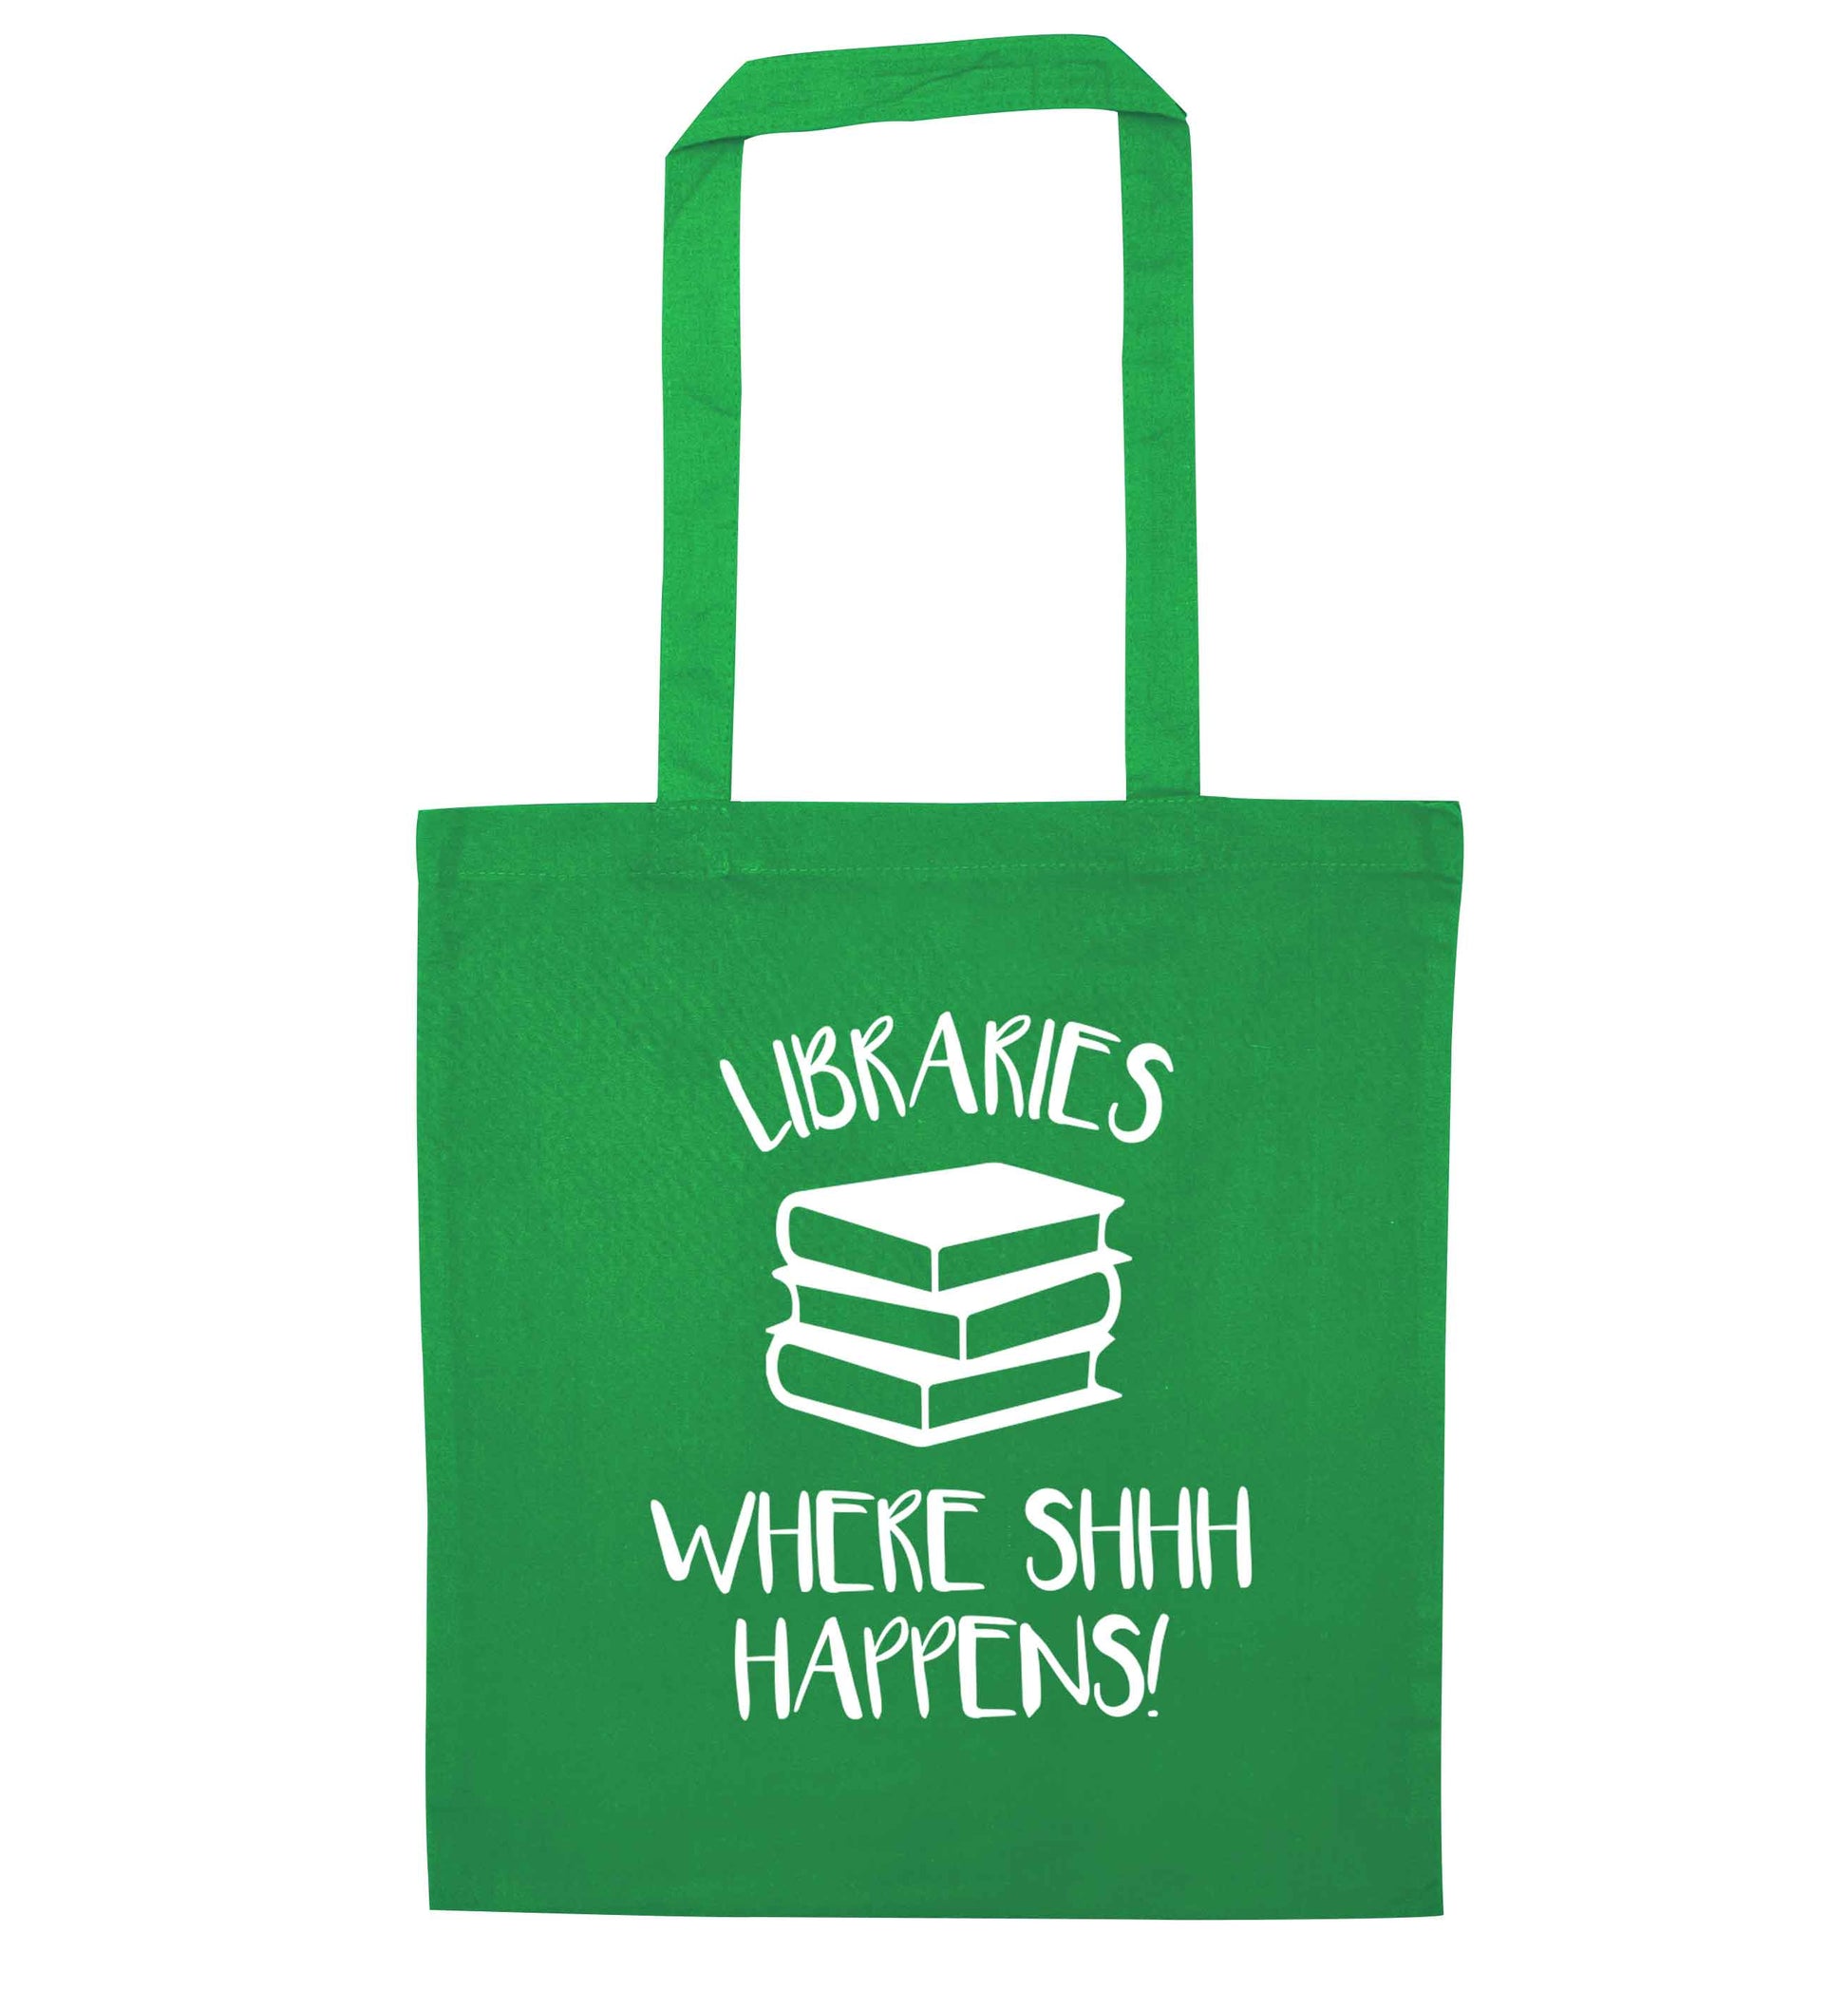 Libraries where shh happens! green tote bag